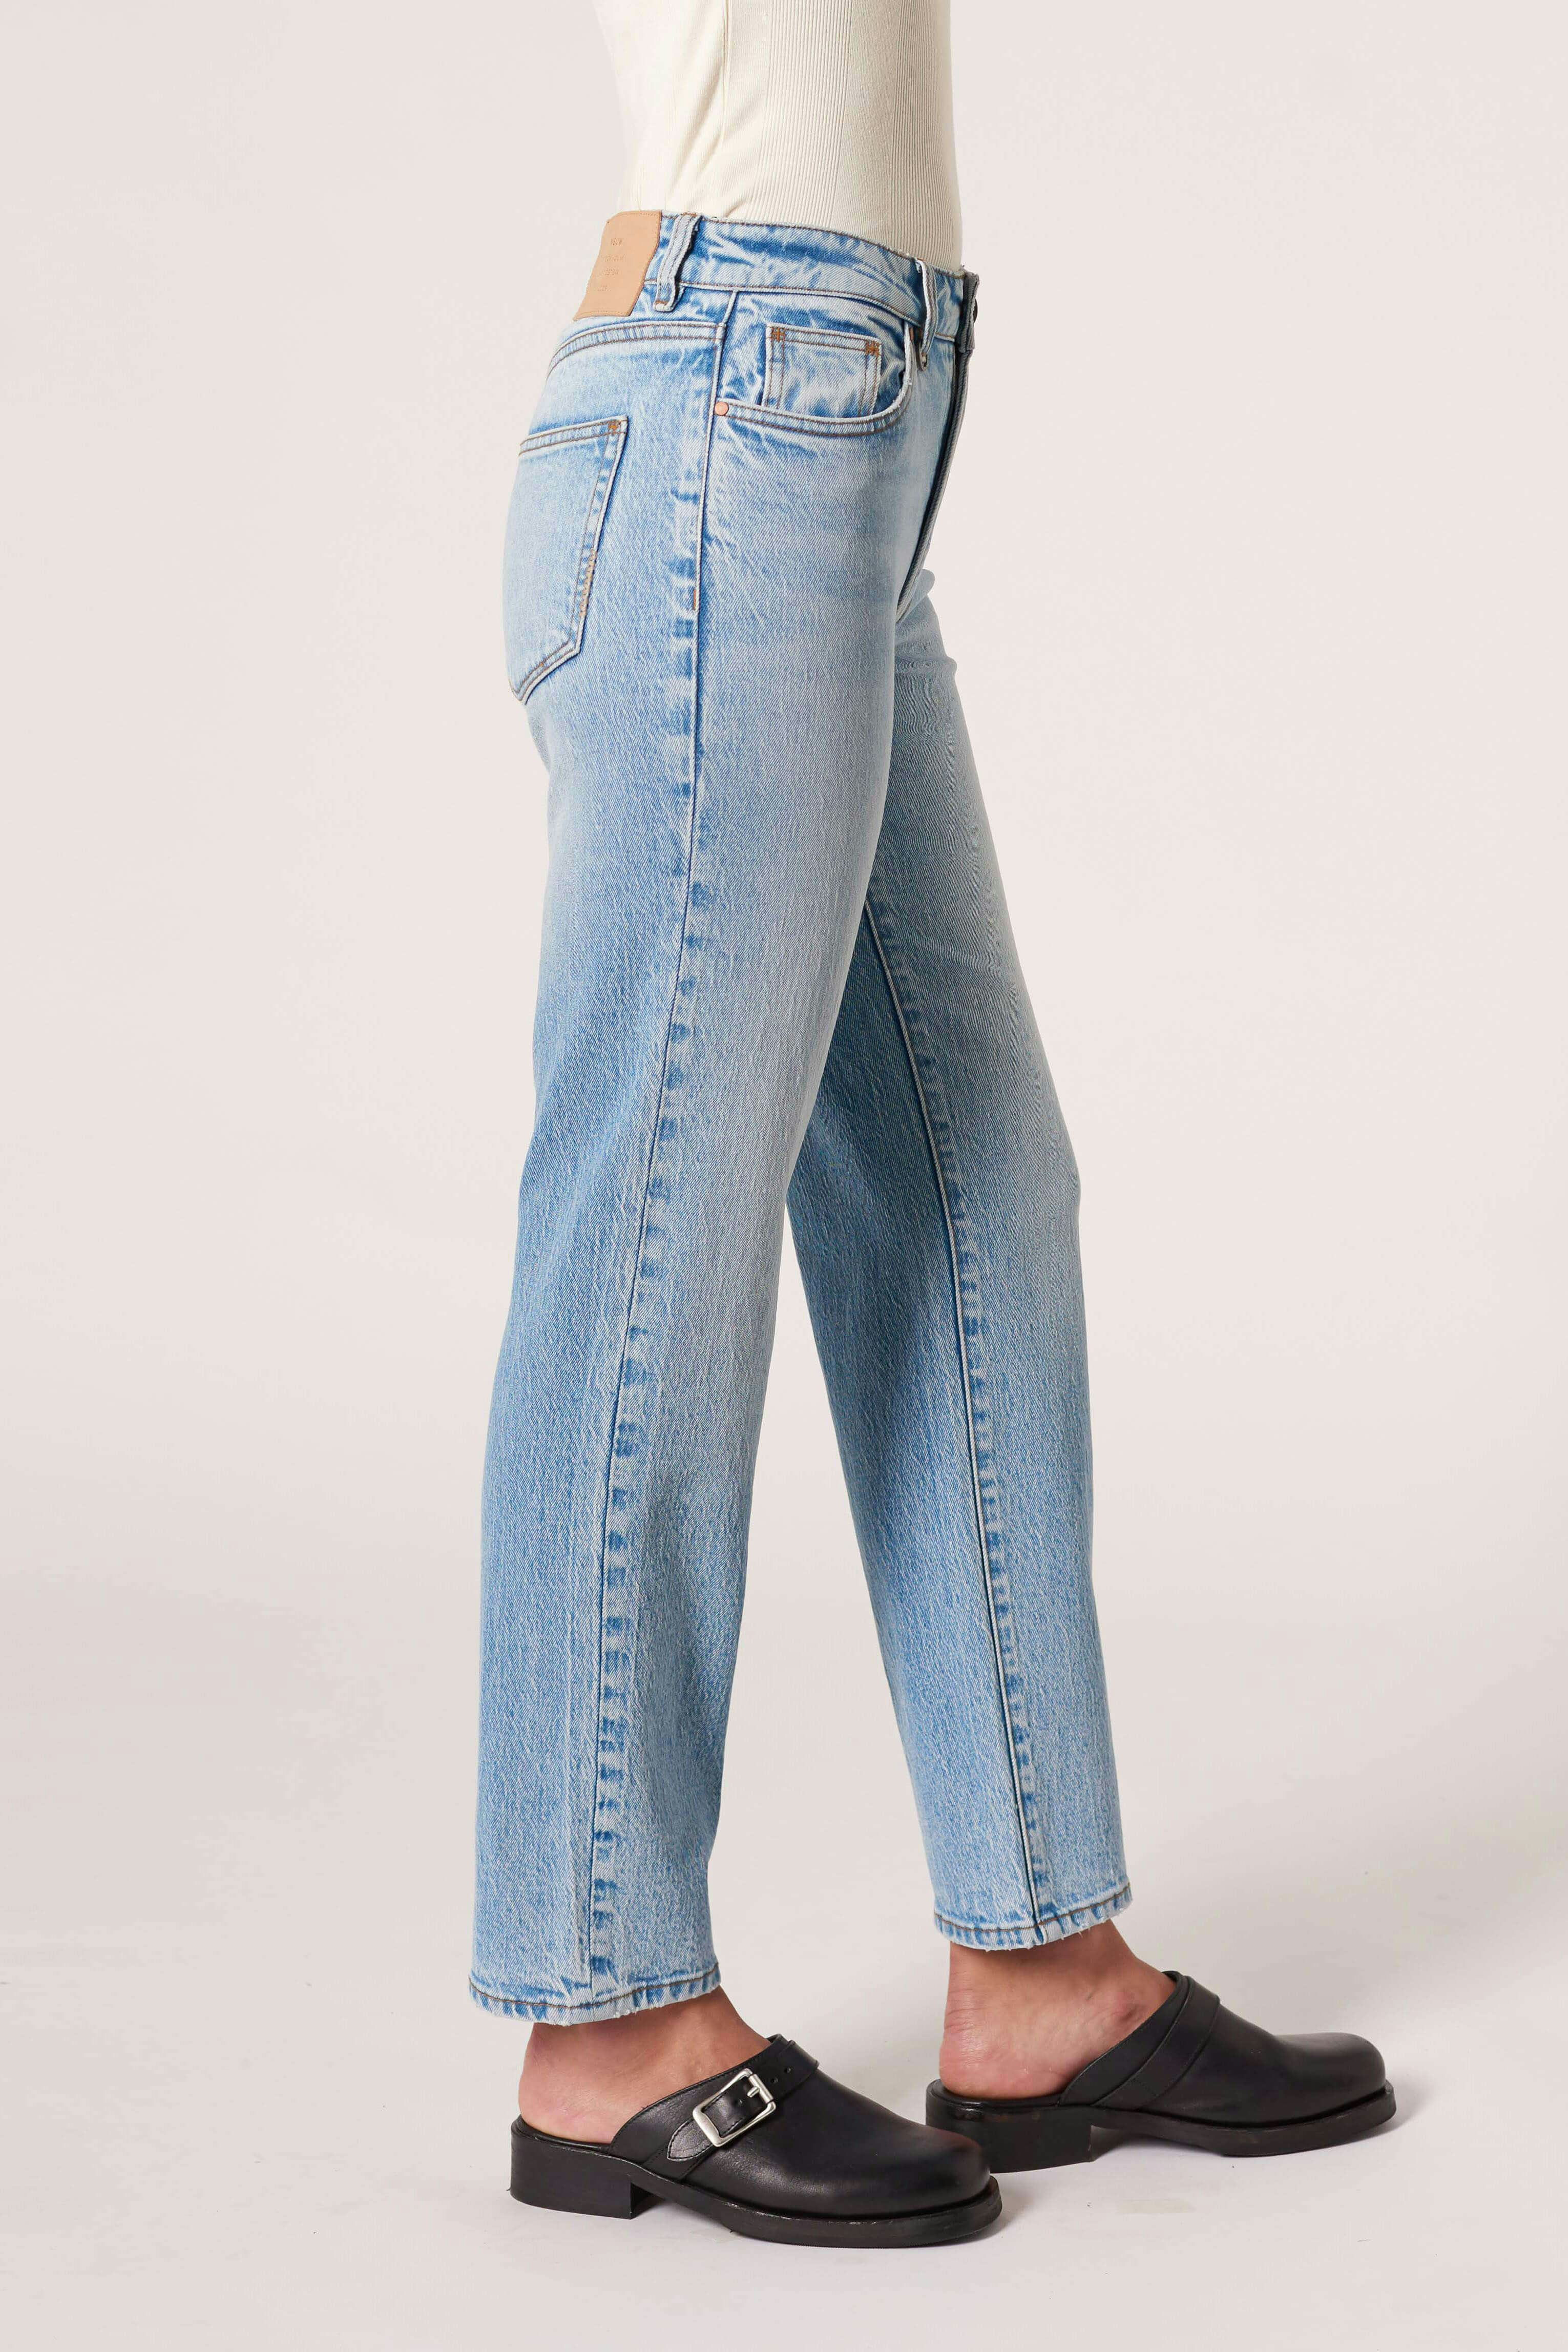 Mica Straight - Pasadena Neuw light lightblue womens-jeans 